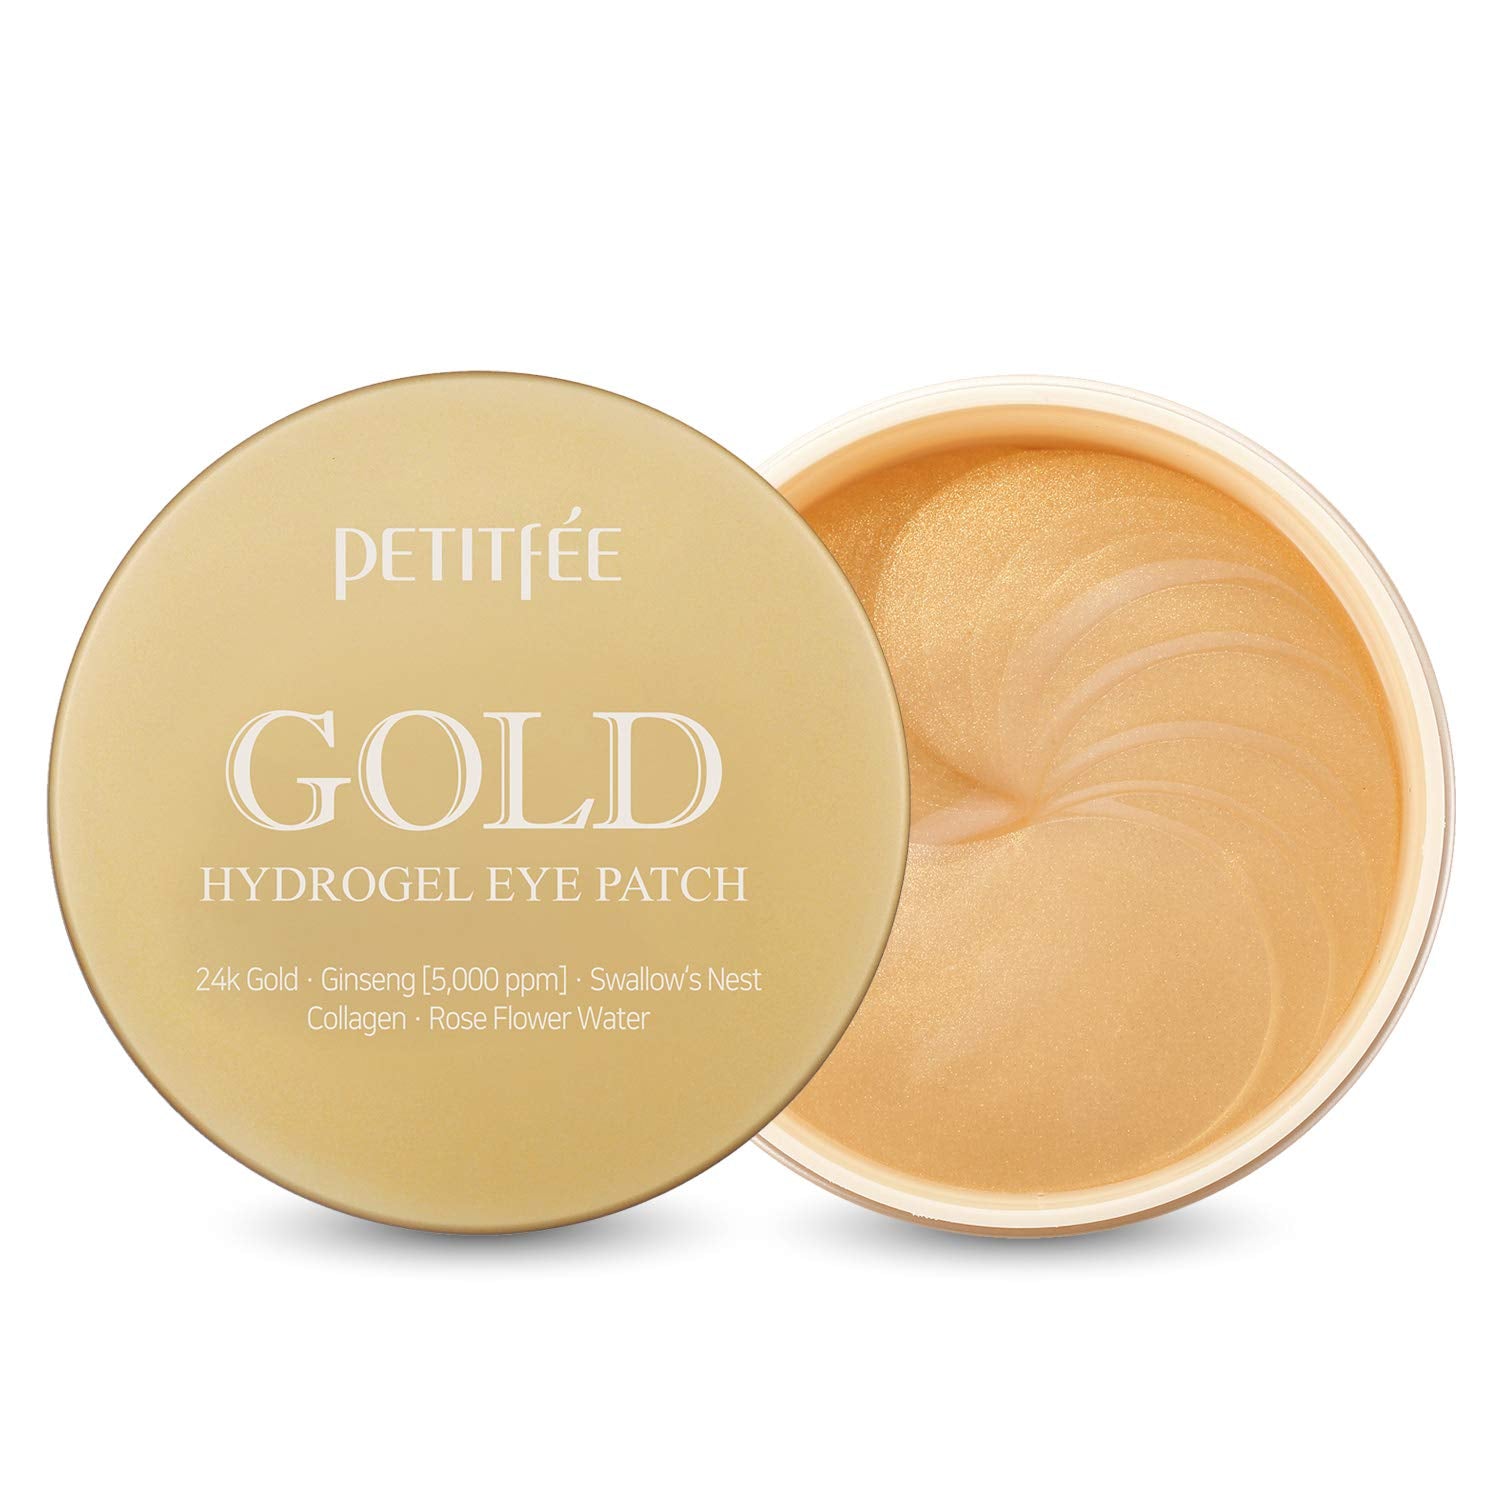 Petitfee Gold Hydrogel Eye Patch 60ea (30 usage) - Dodoskin